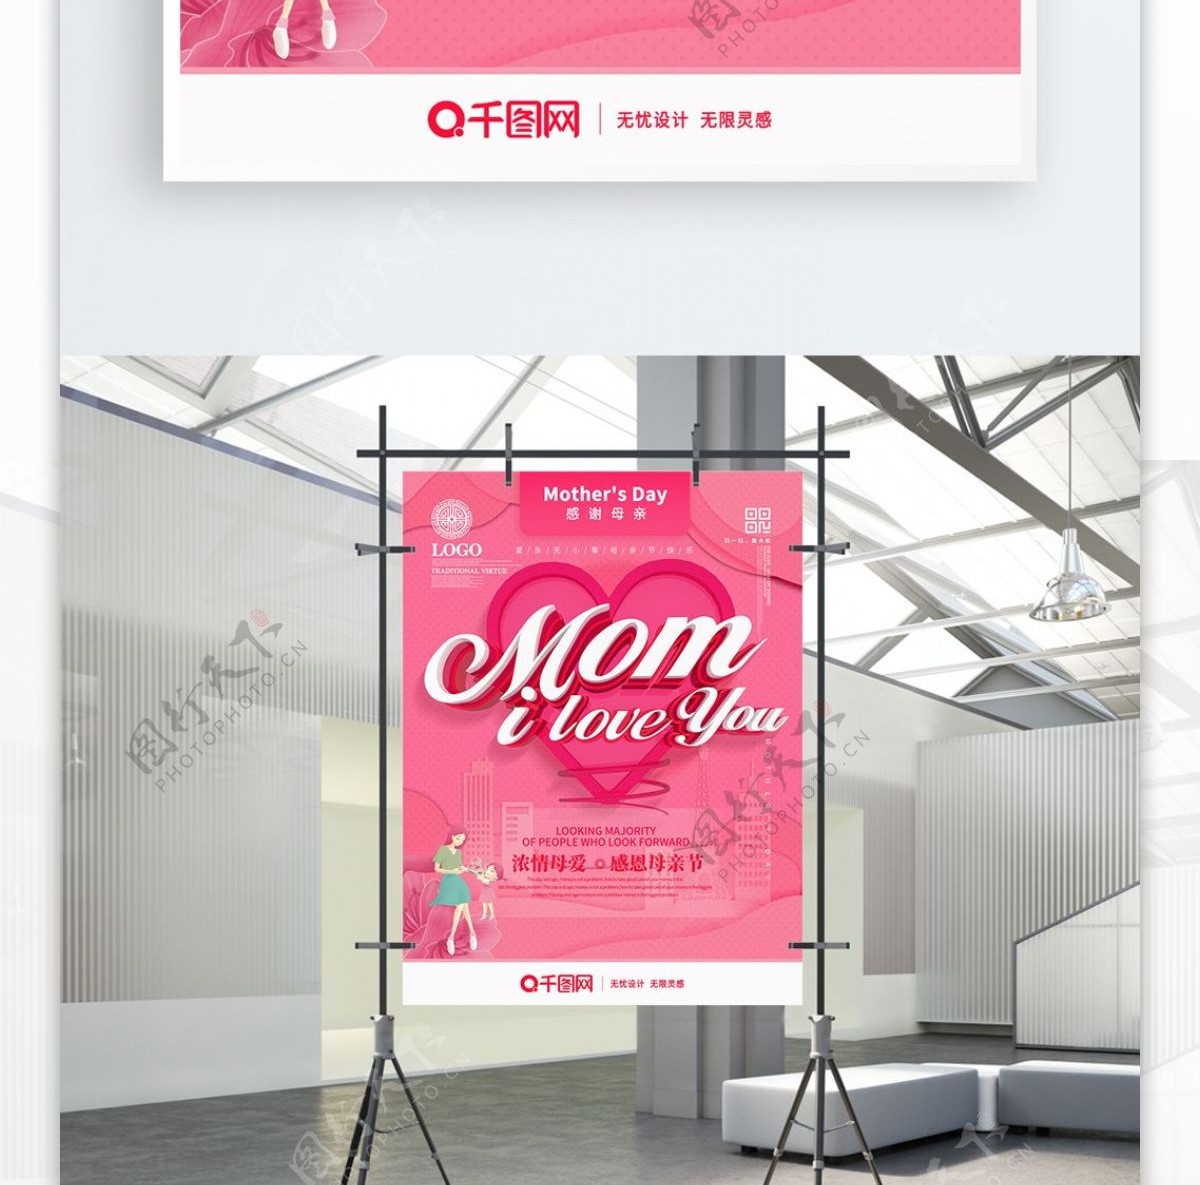 C4D粉色创意母亲节宣传海报